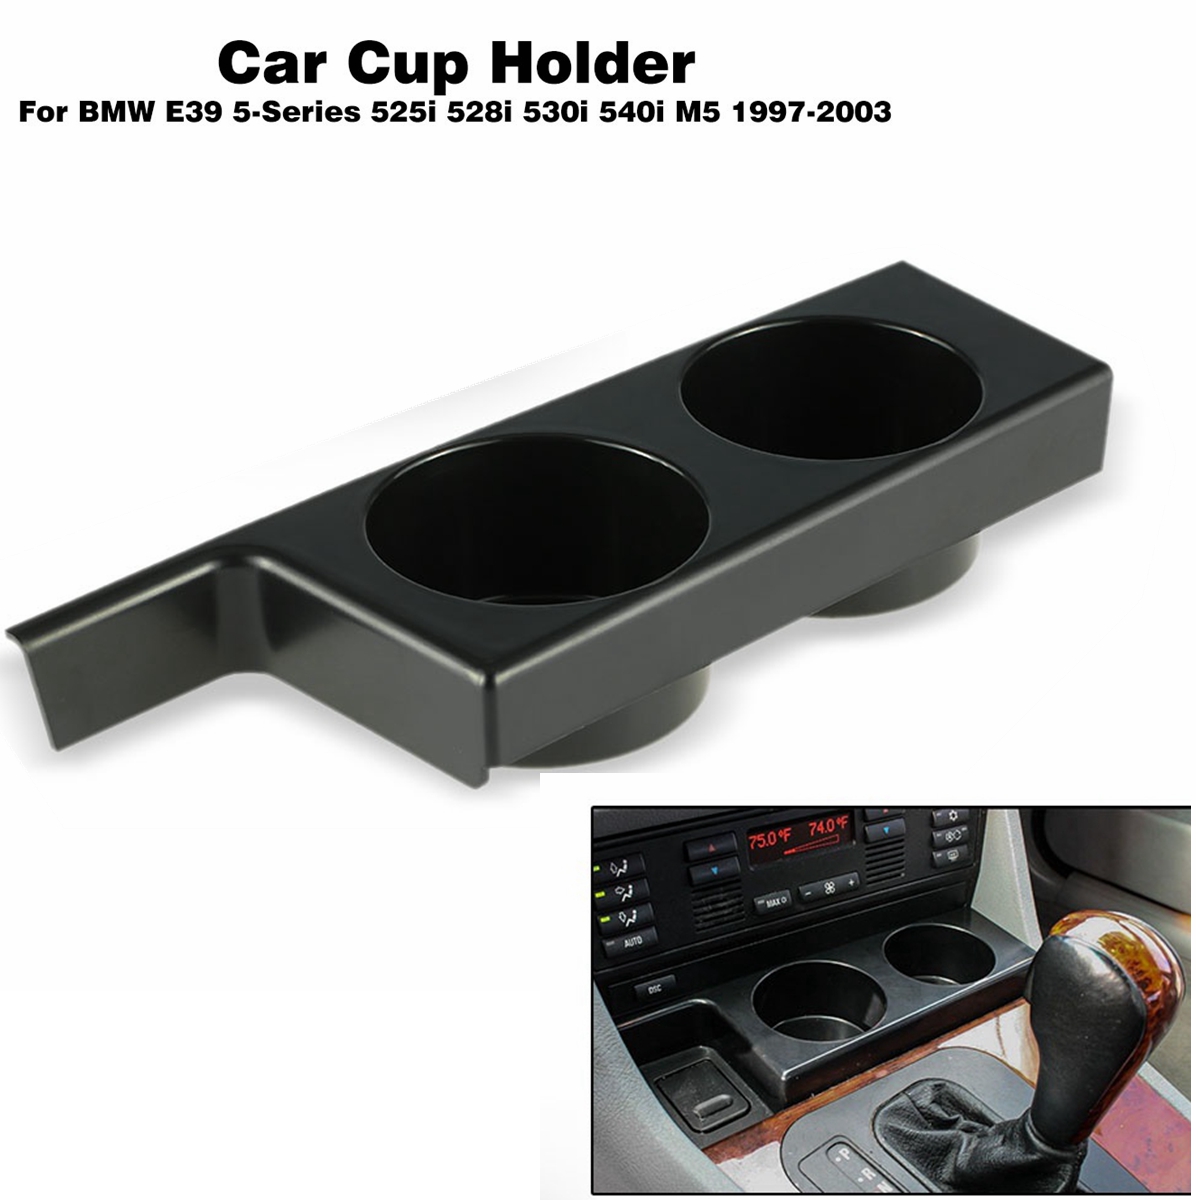 Center Console Cup Holder for BMW E39 5-Series 1997-2003 528i 525i